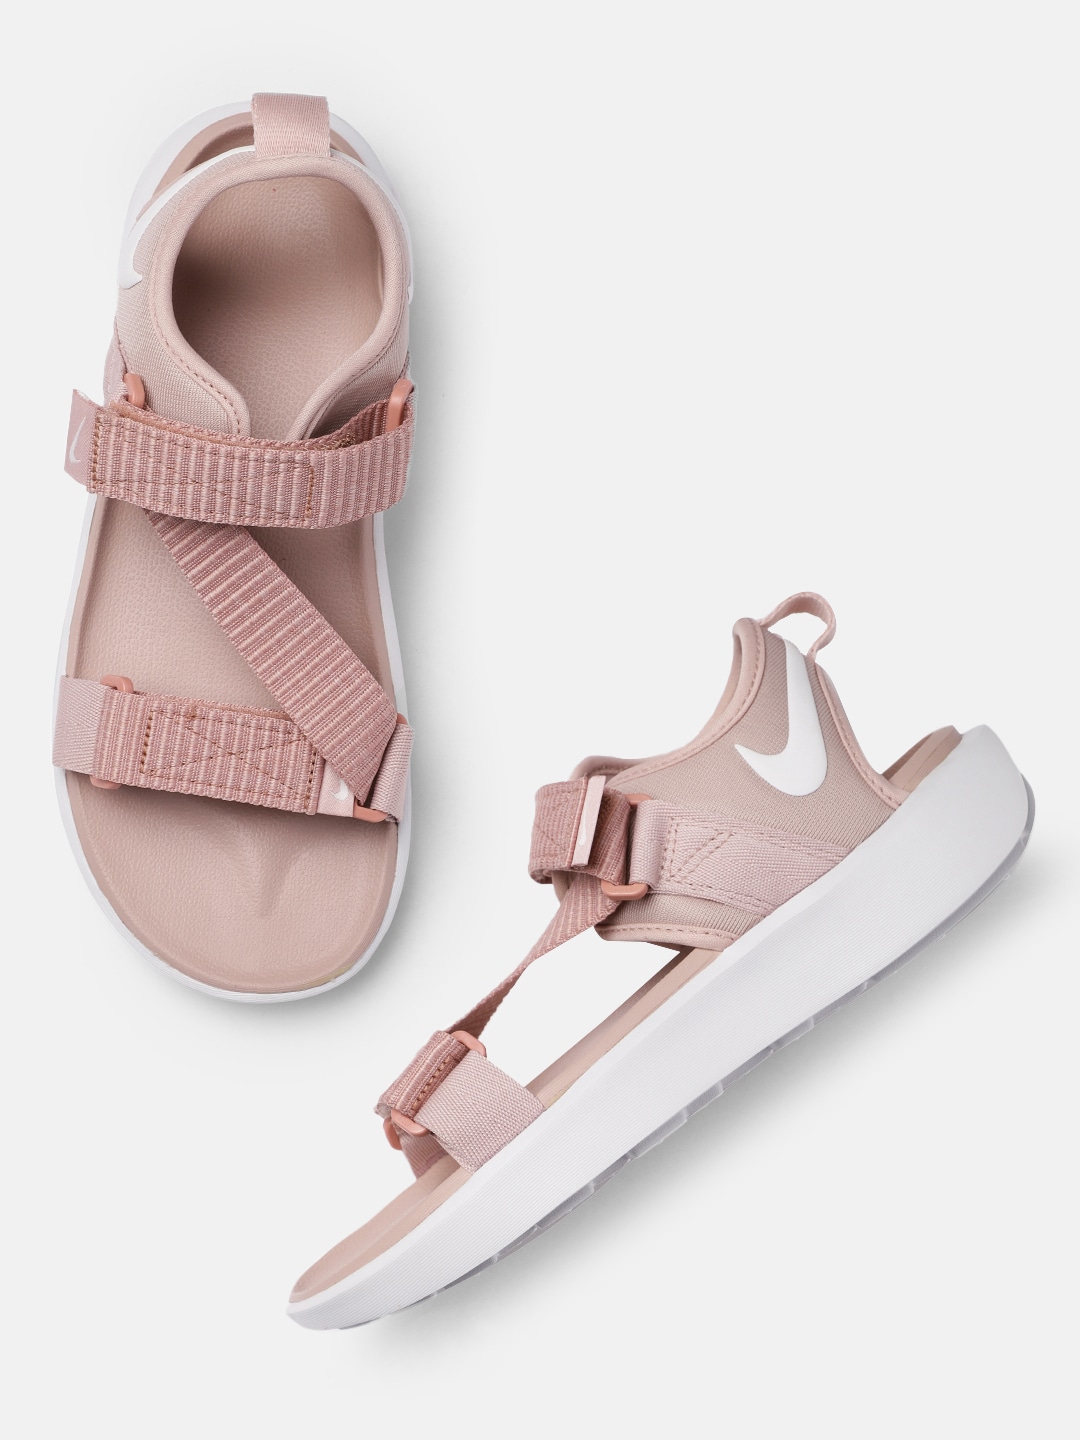 Nike Women Pink Textured VISTA Sports Sandals Price in India